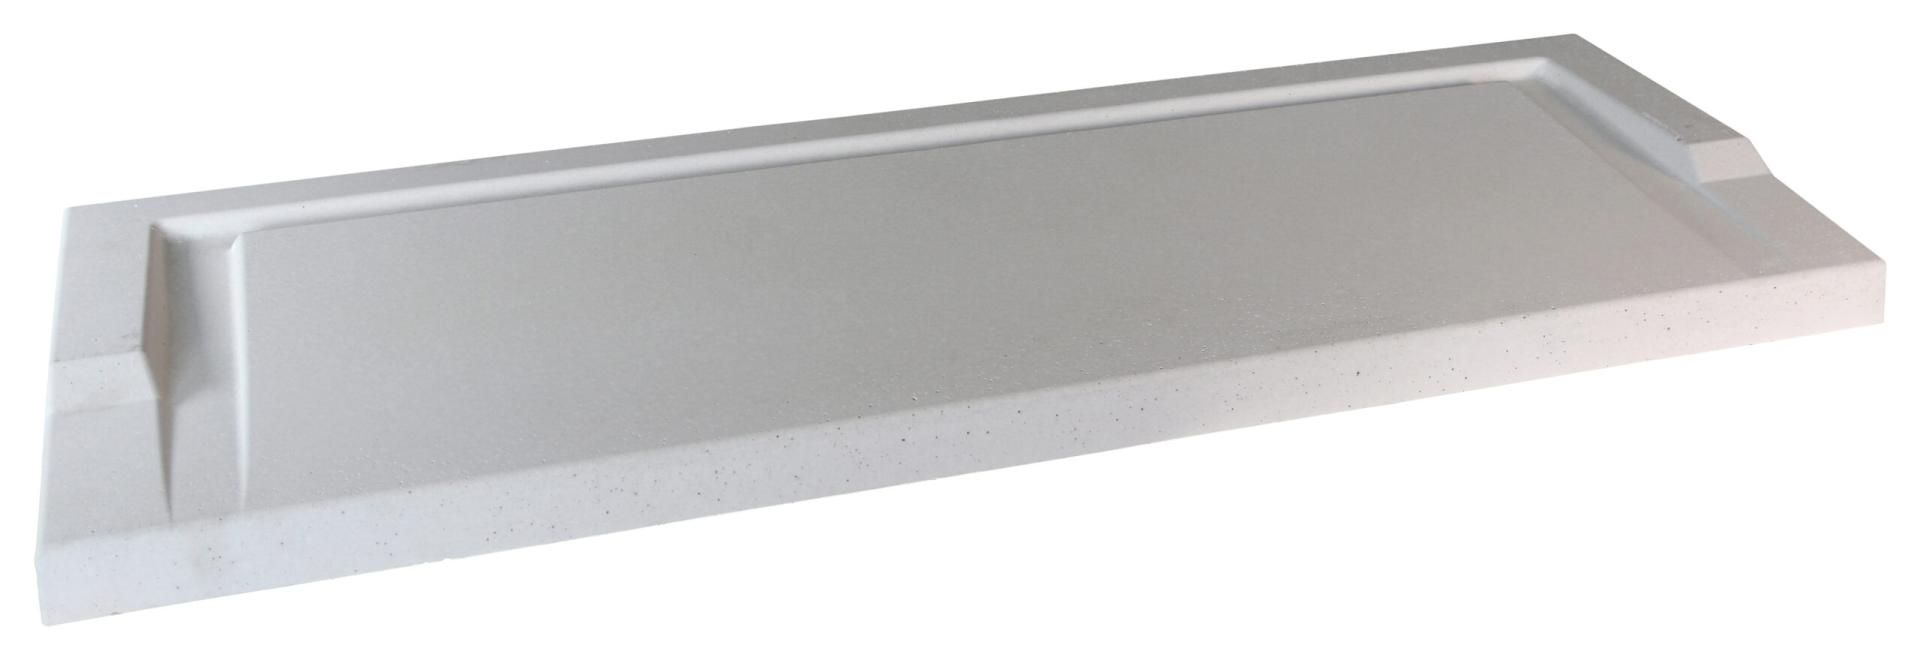 seuil-beton-pmr-lisse-35cm-100-110-daulouede-blanc-0